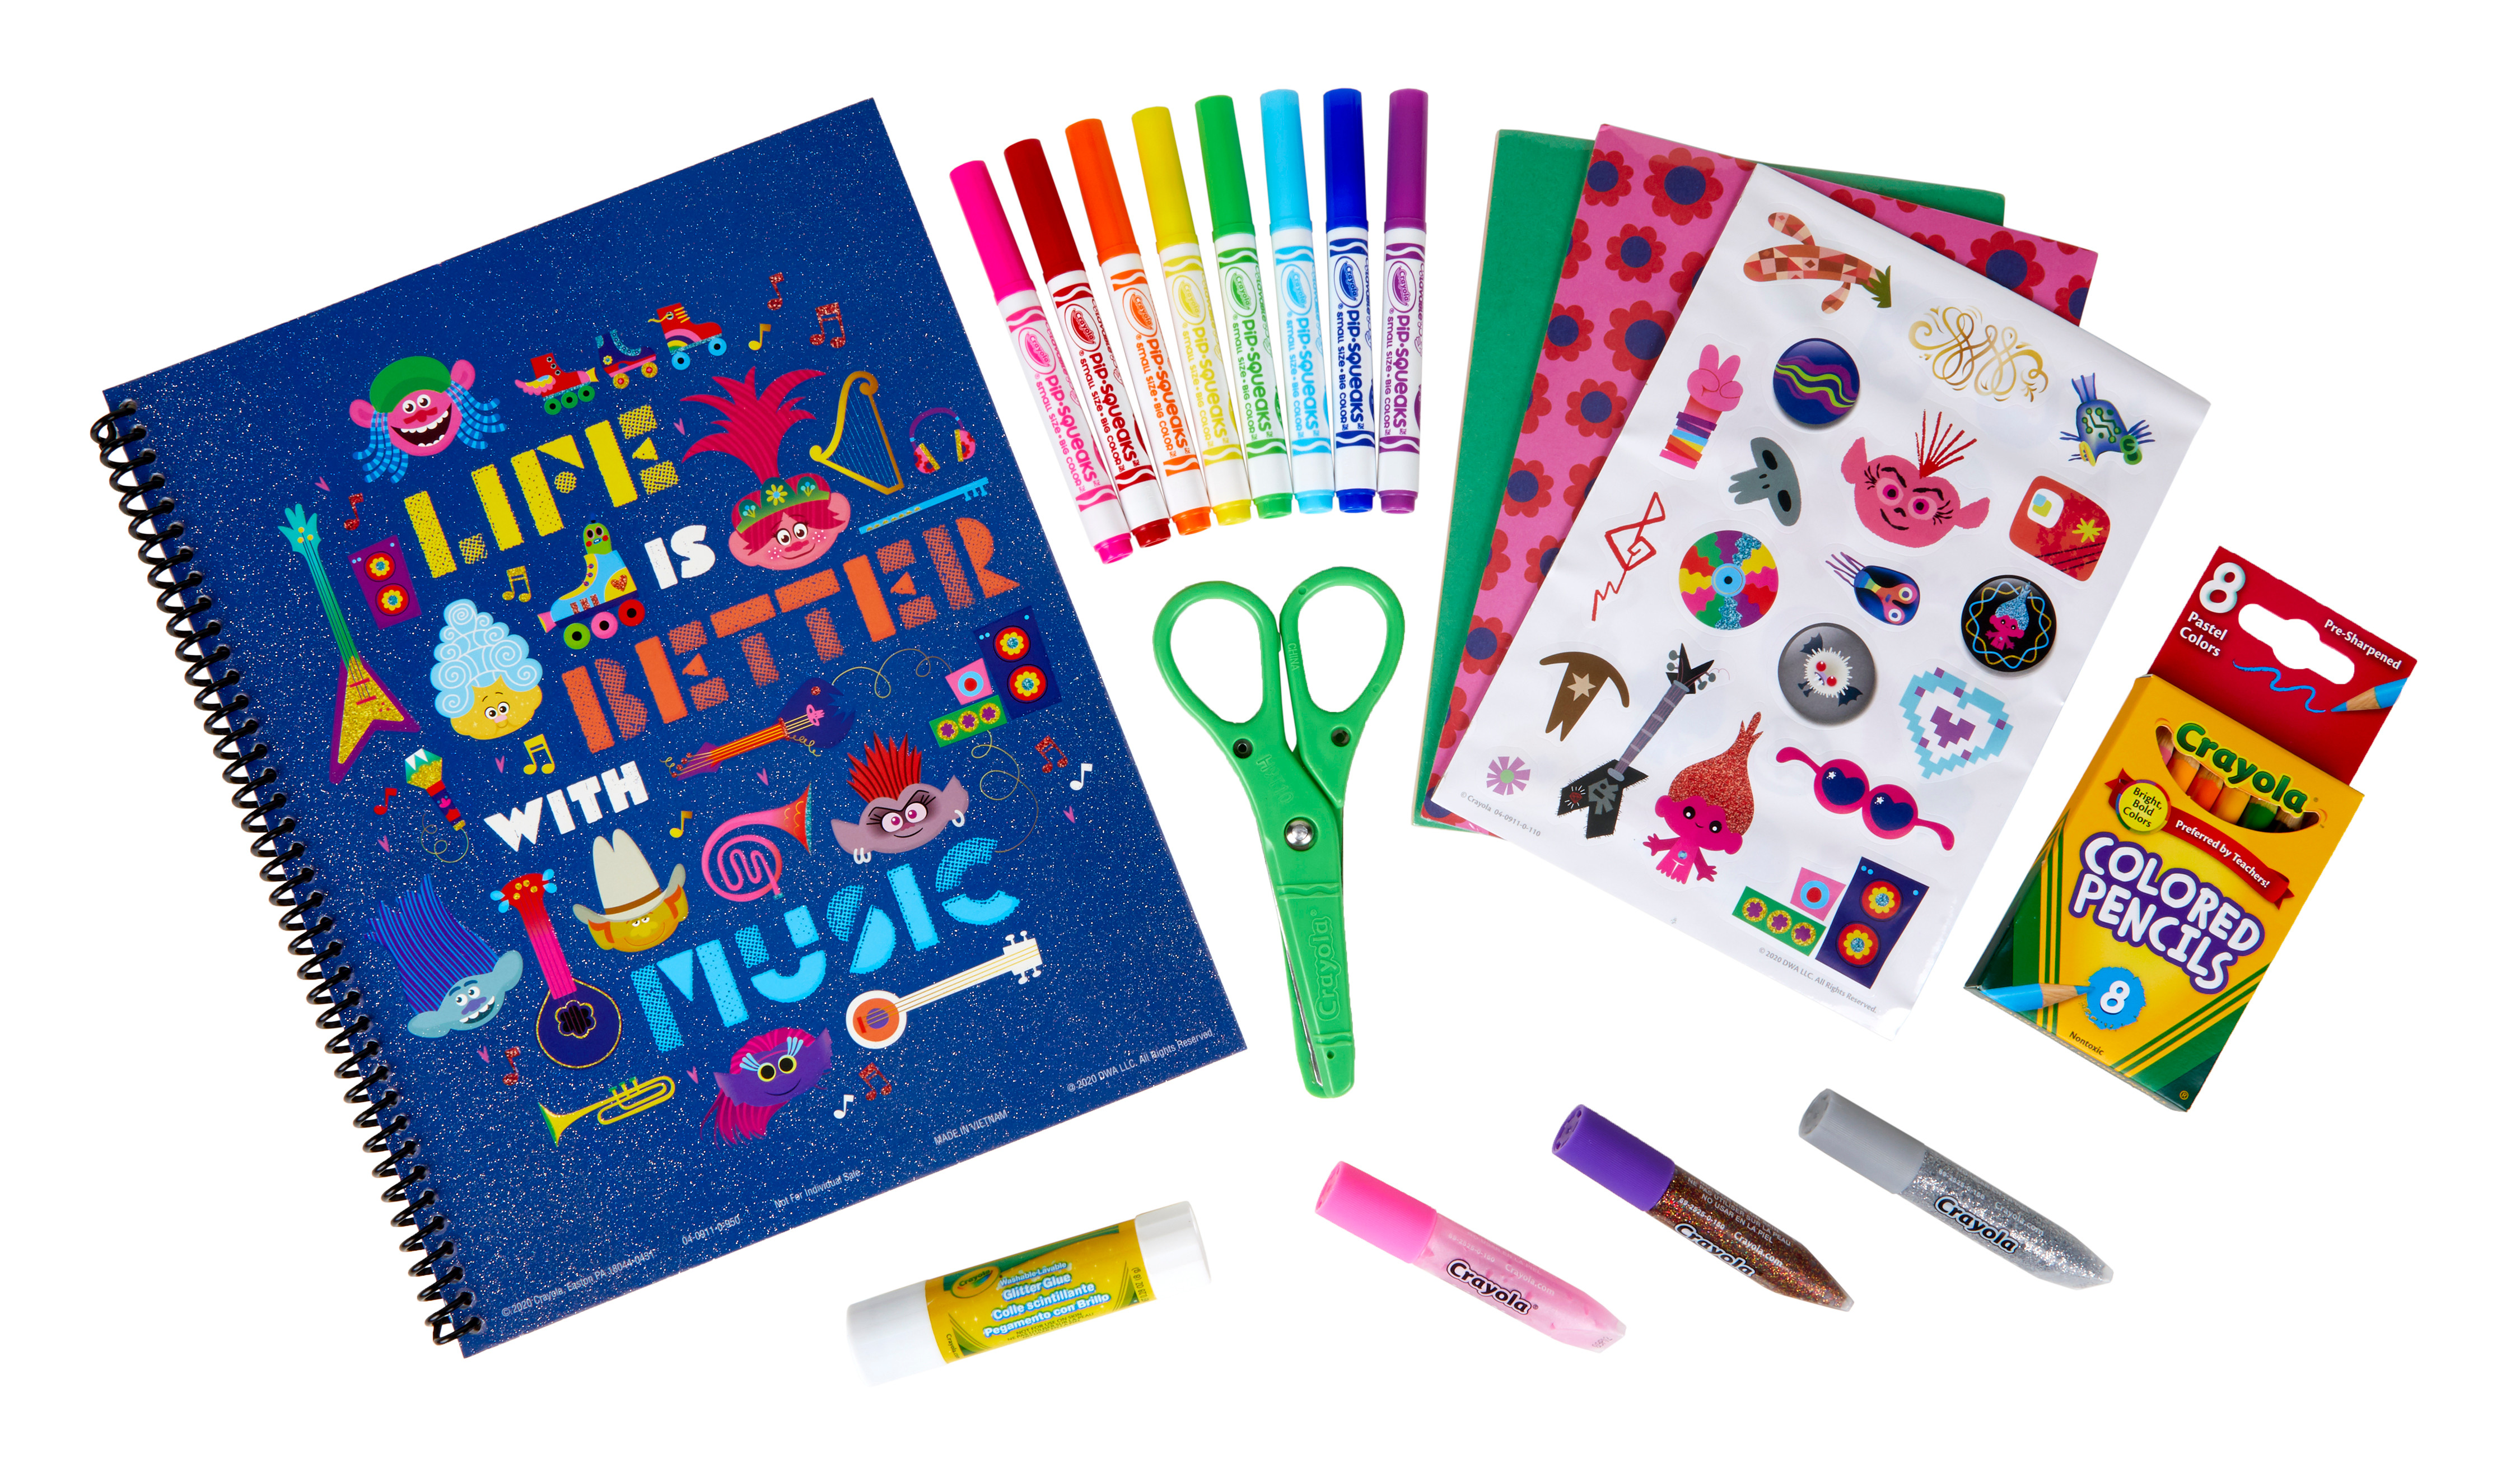 Crayola Trolls World Tour, Scrapbook Kit, Trolls 2, Over 60 Art Supplies, Gift for Kids, Child - image 3 of 6